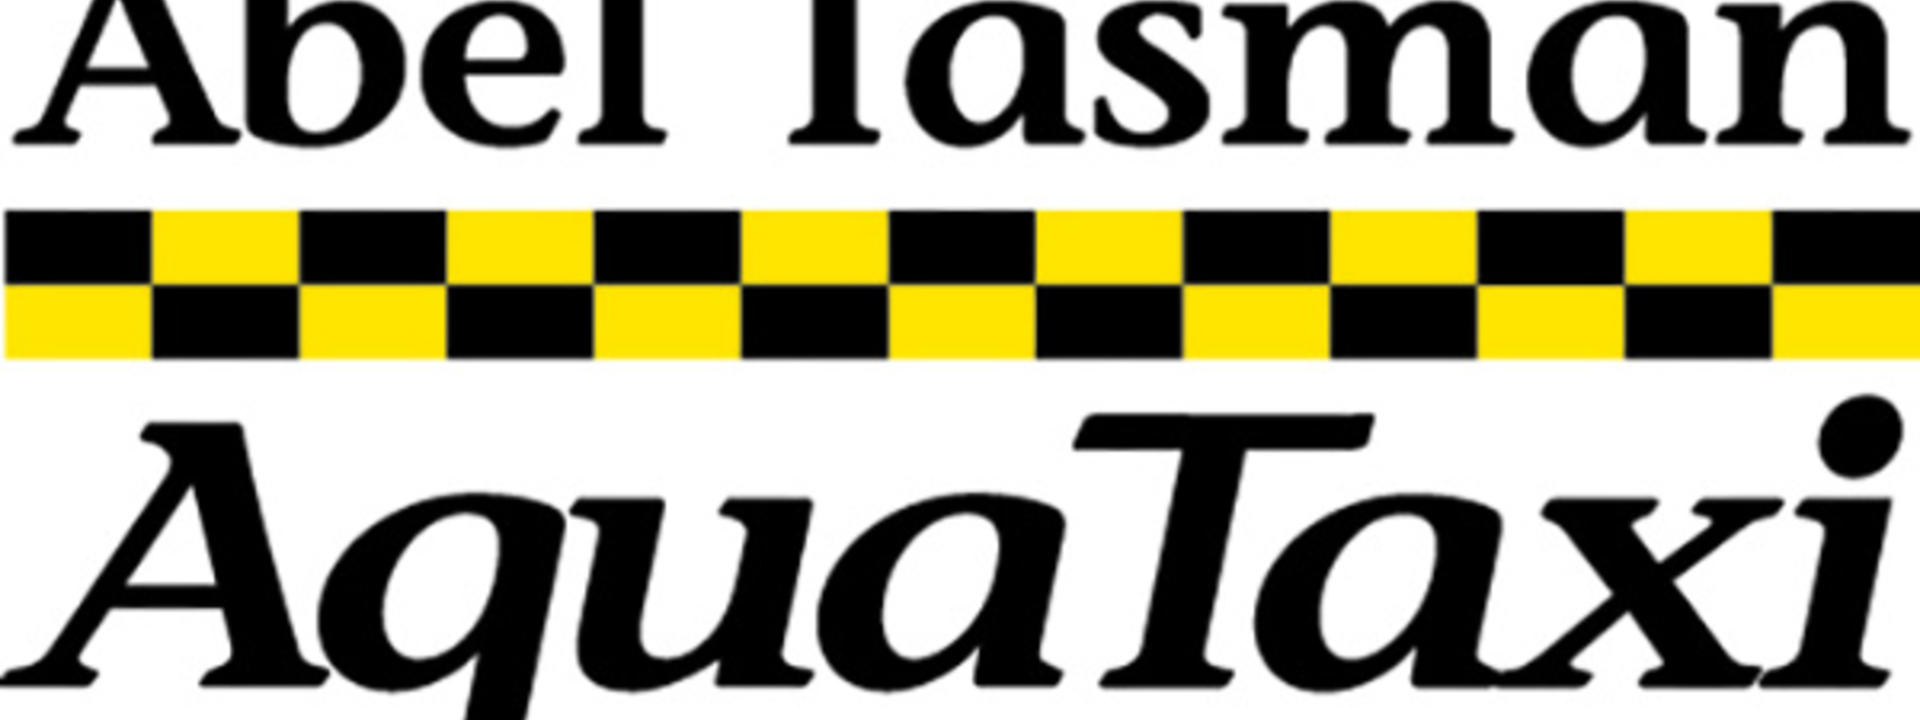 Logo: Abel Tasman AquaTaxi